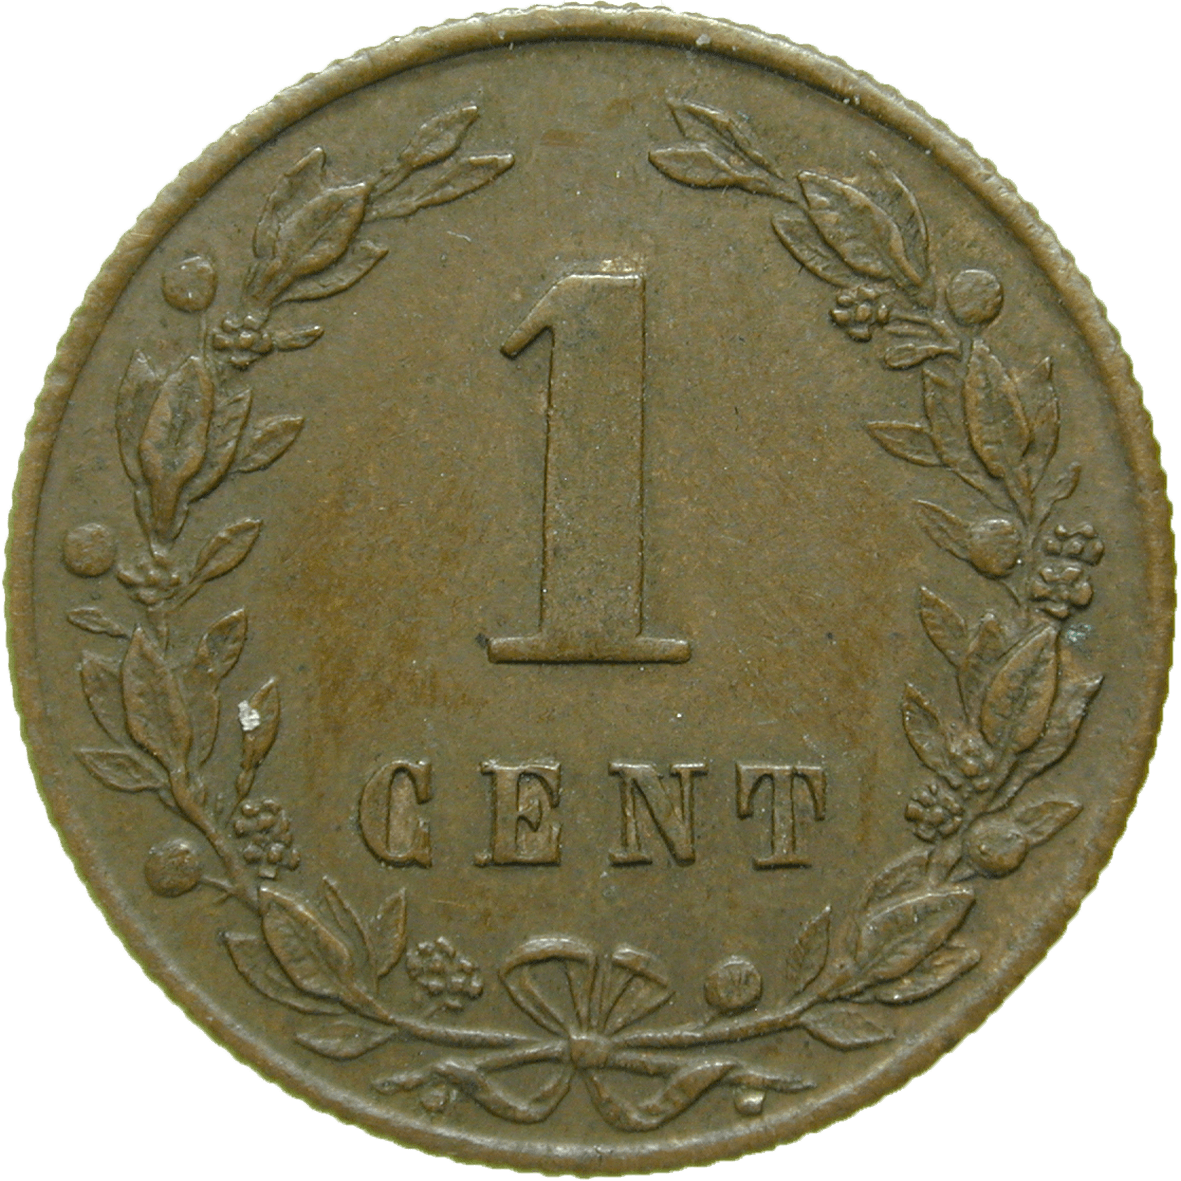 Kingdom of the Netherlands, William III, 1 Cent 1881 (reverse)